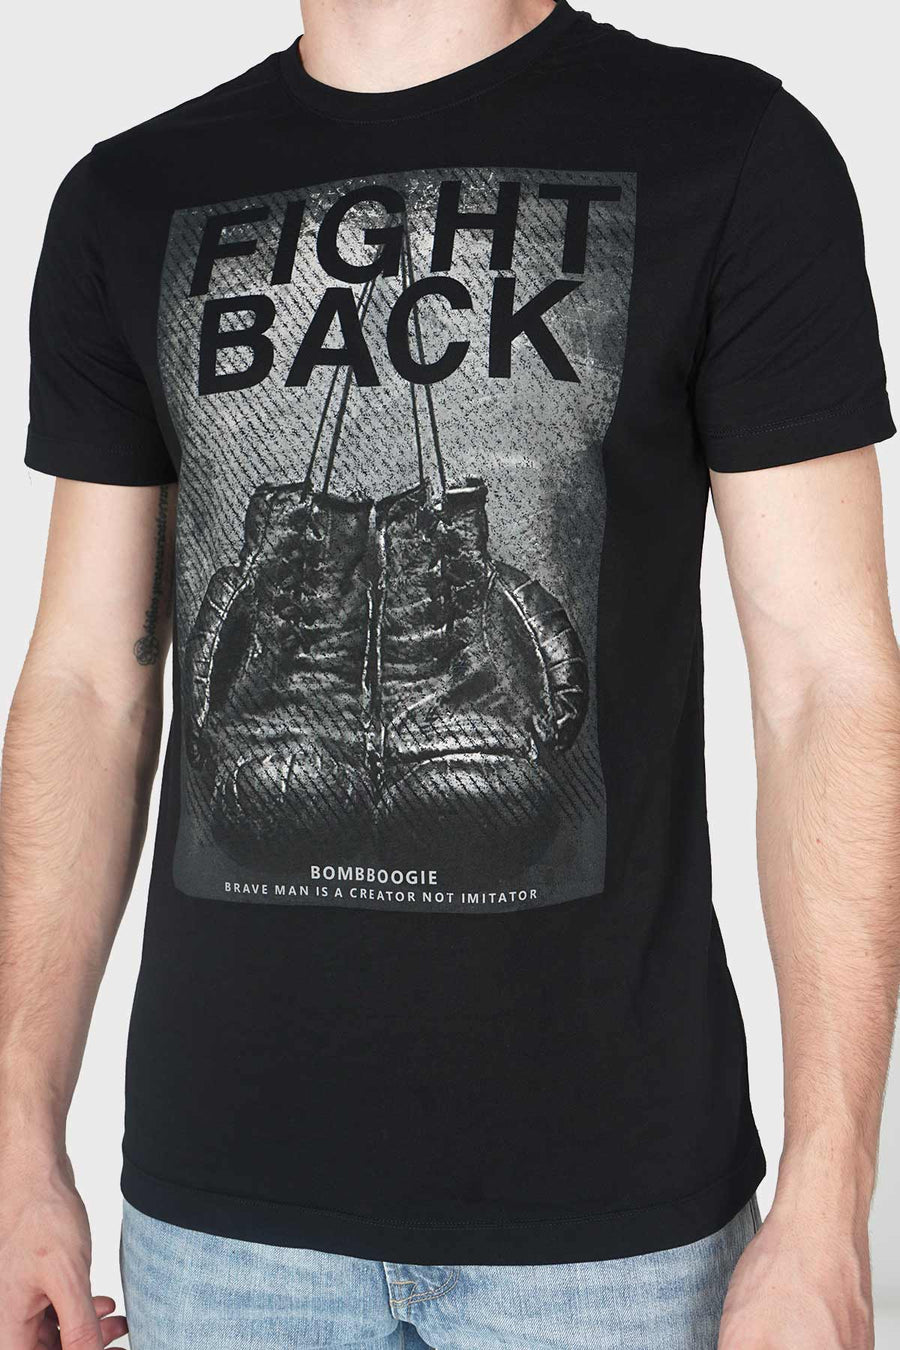 T-Shirt Lengan Pendek Fliction Black